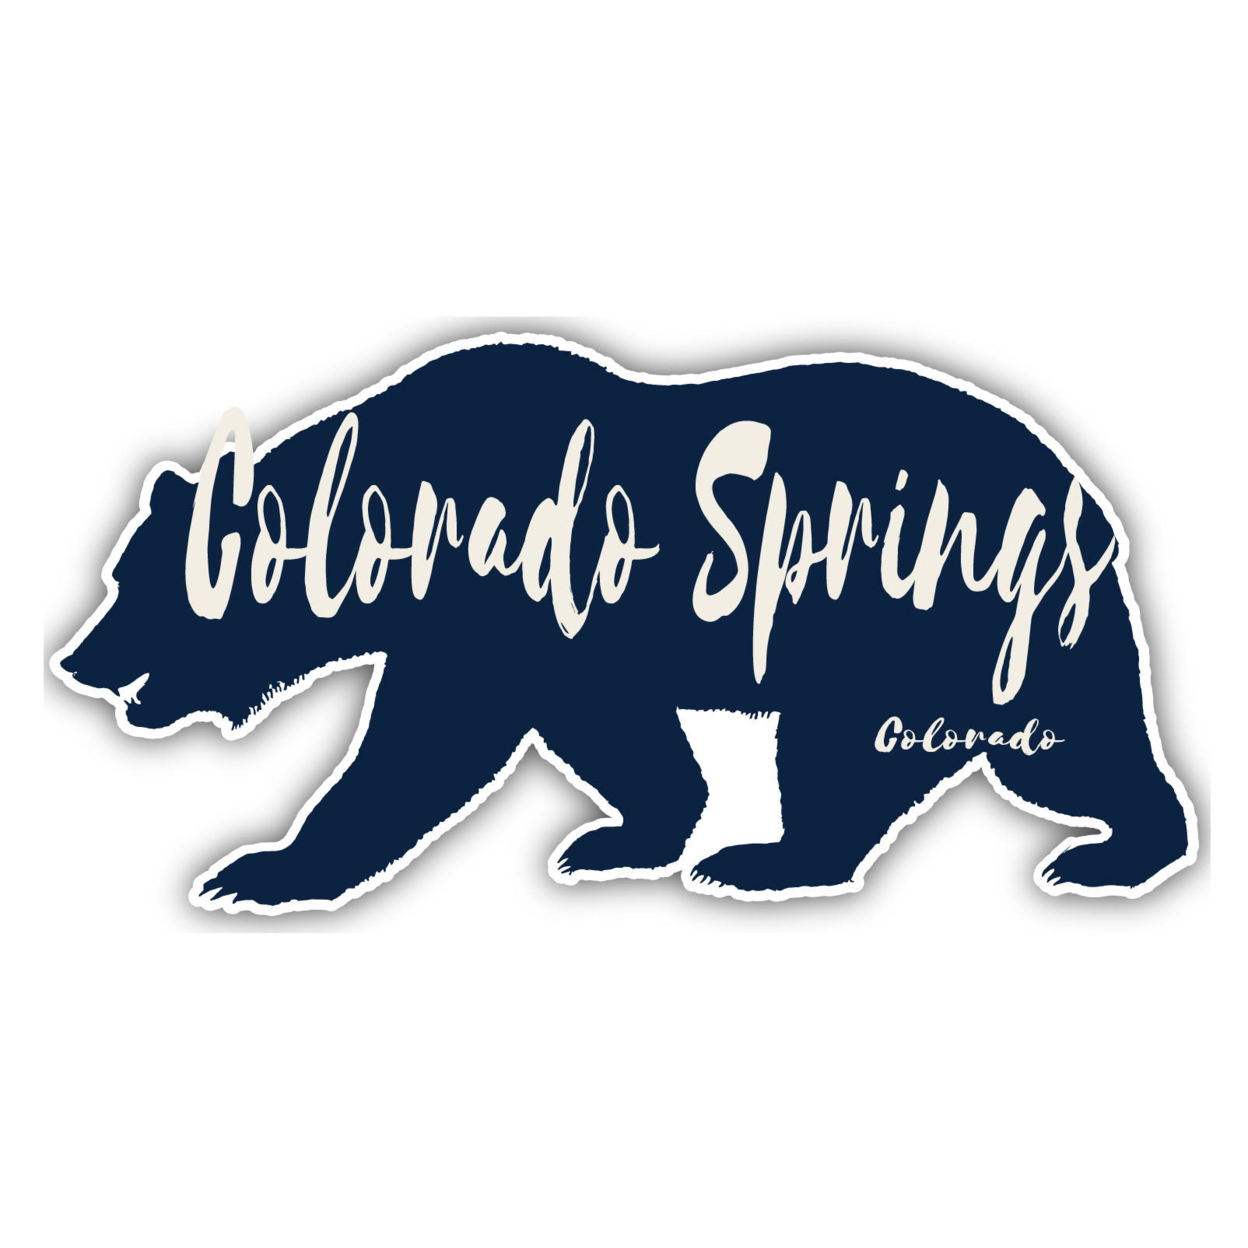 Colorado Springs Colorado Souvenir Decorative Stickers (Choose Theme And Size) - 4-Pack, 10-Inch, Tent